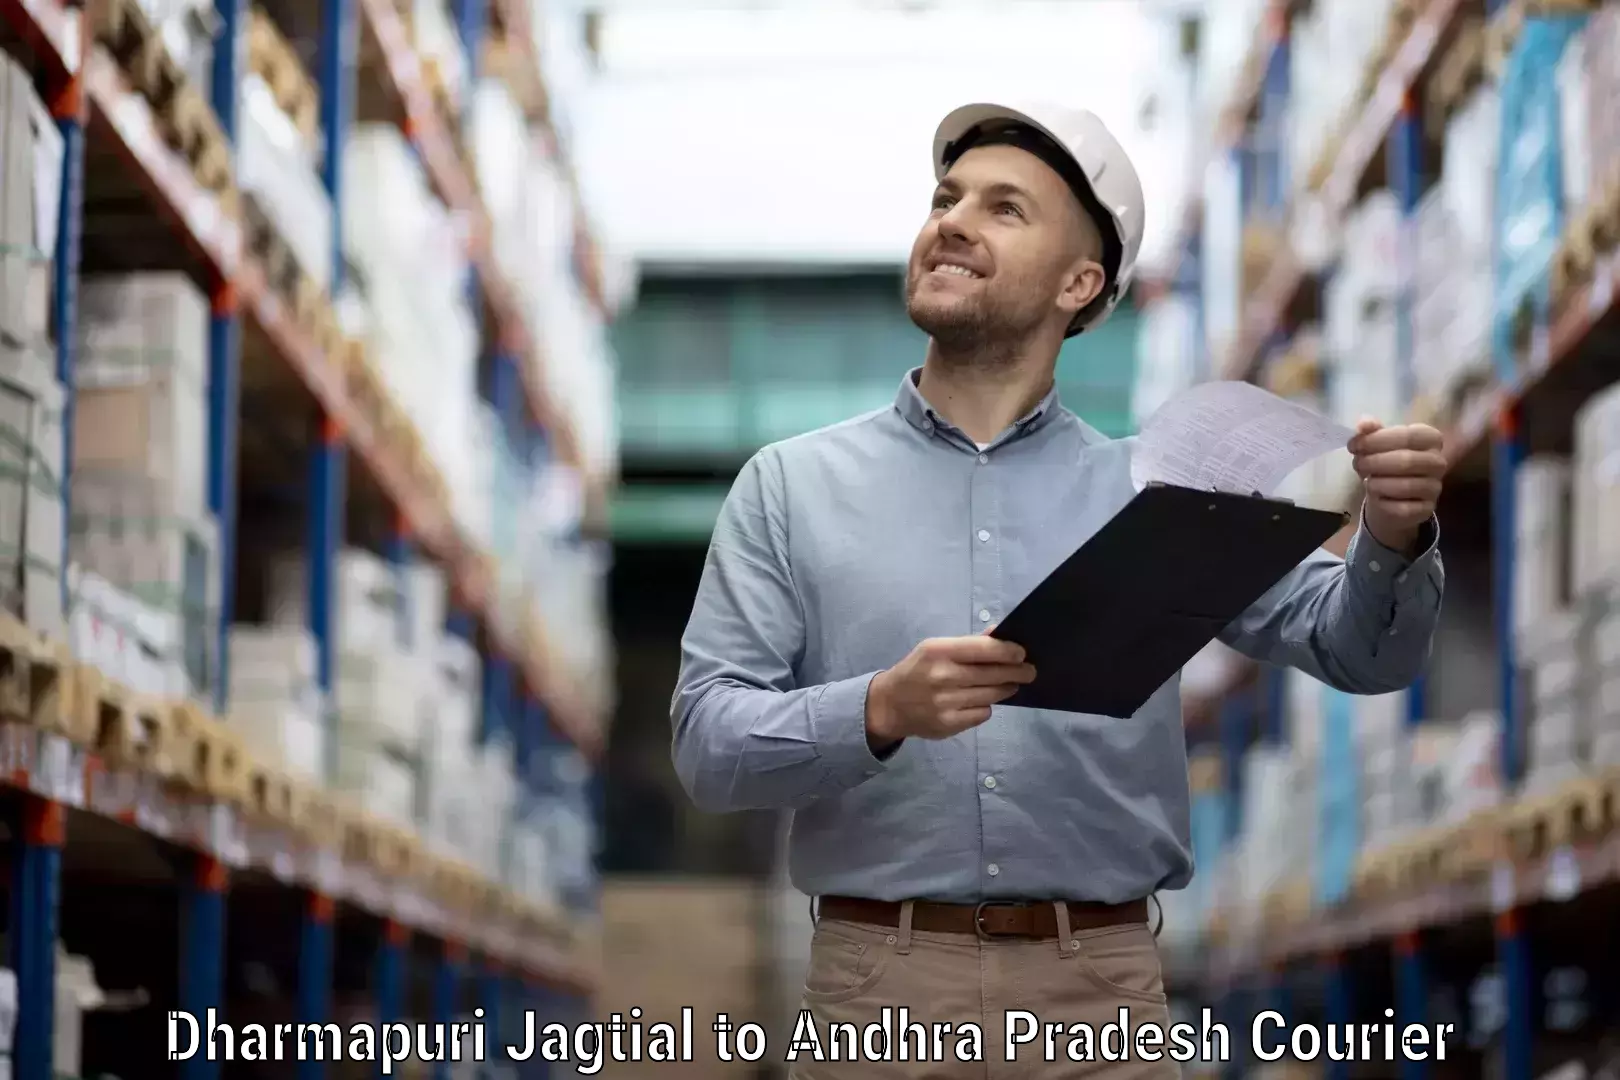 Multi-service courier options Dharmapuri Jagtial to Gajapathinagaram